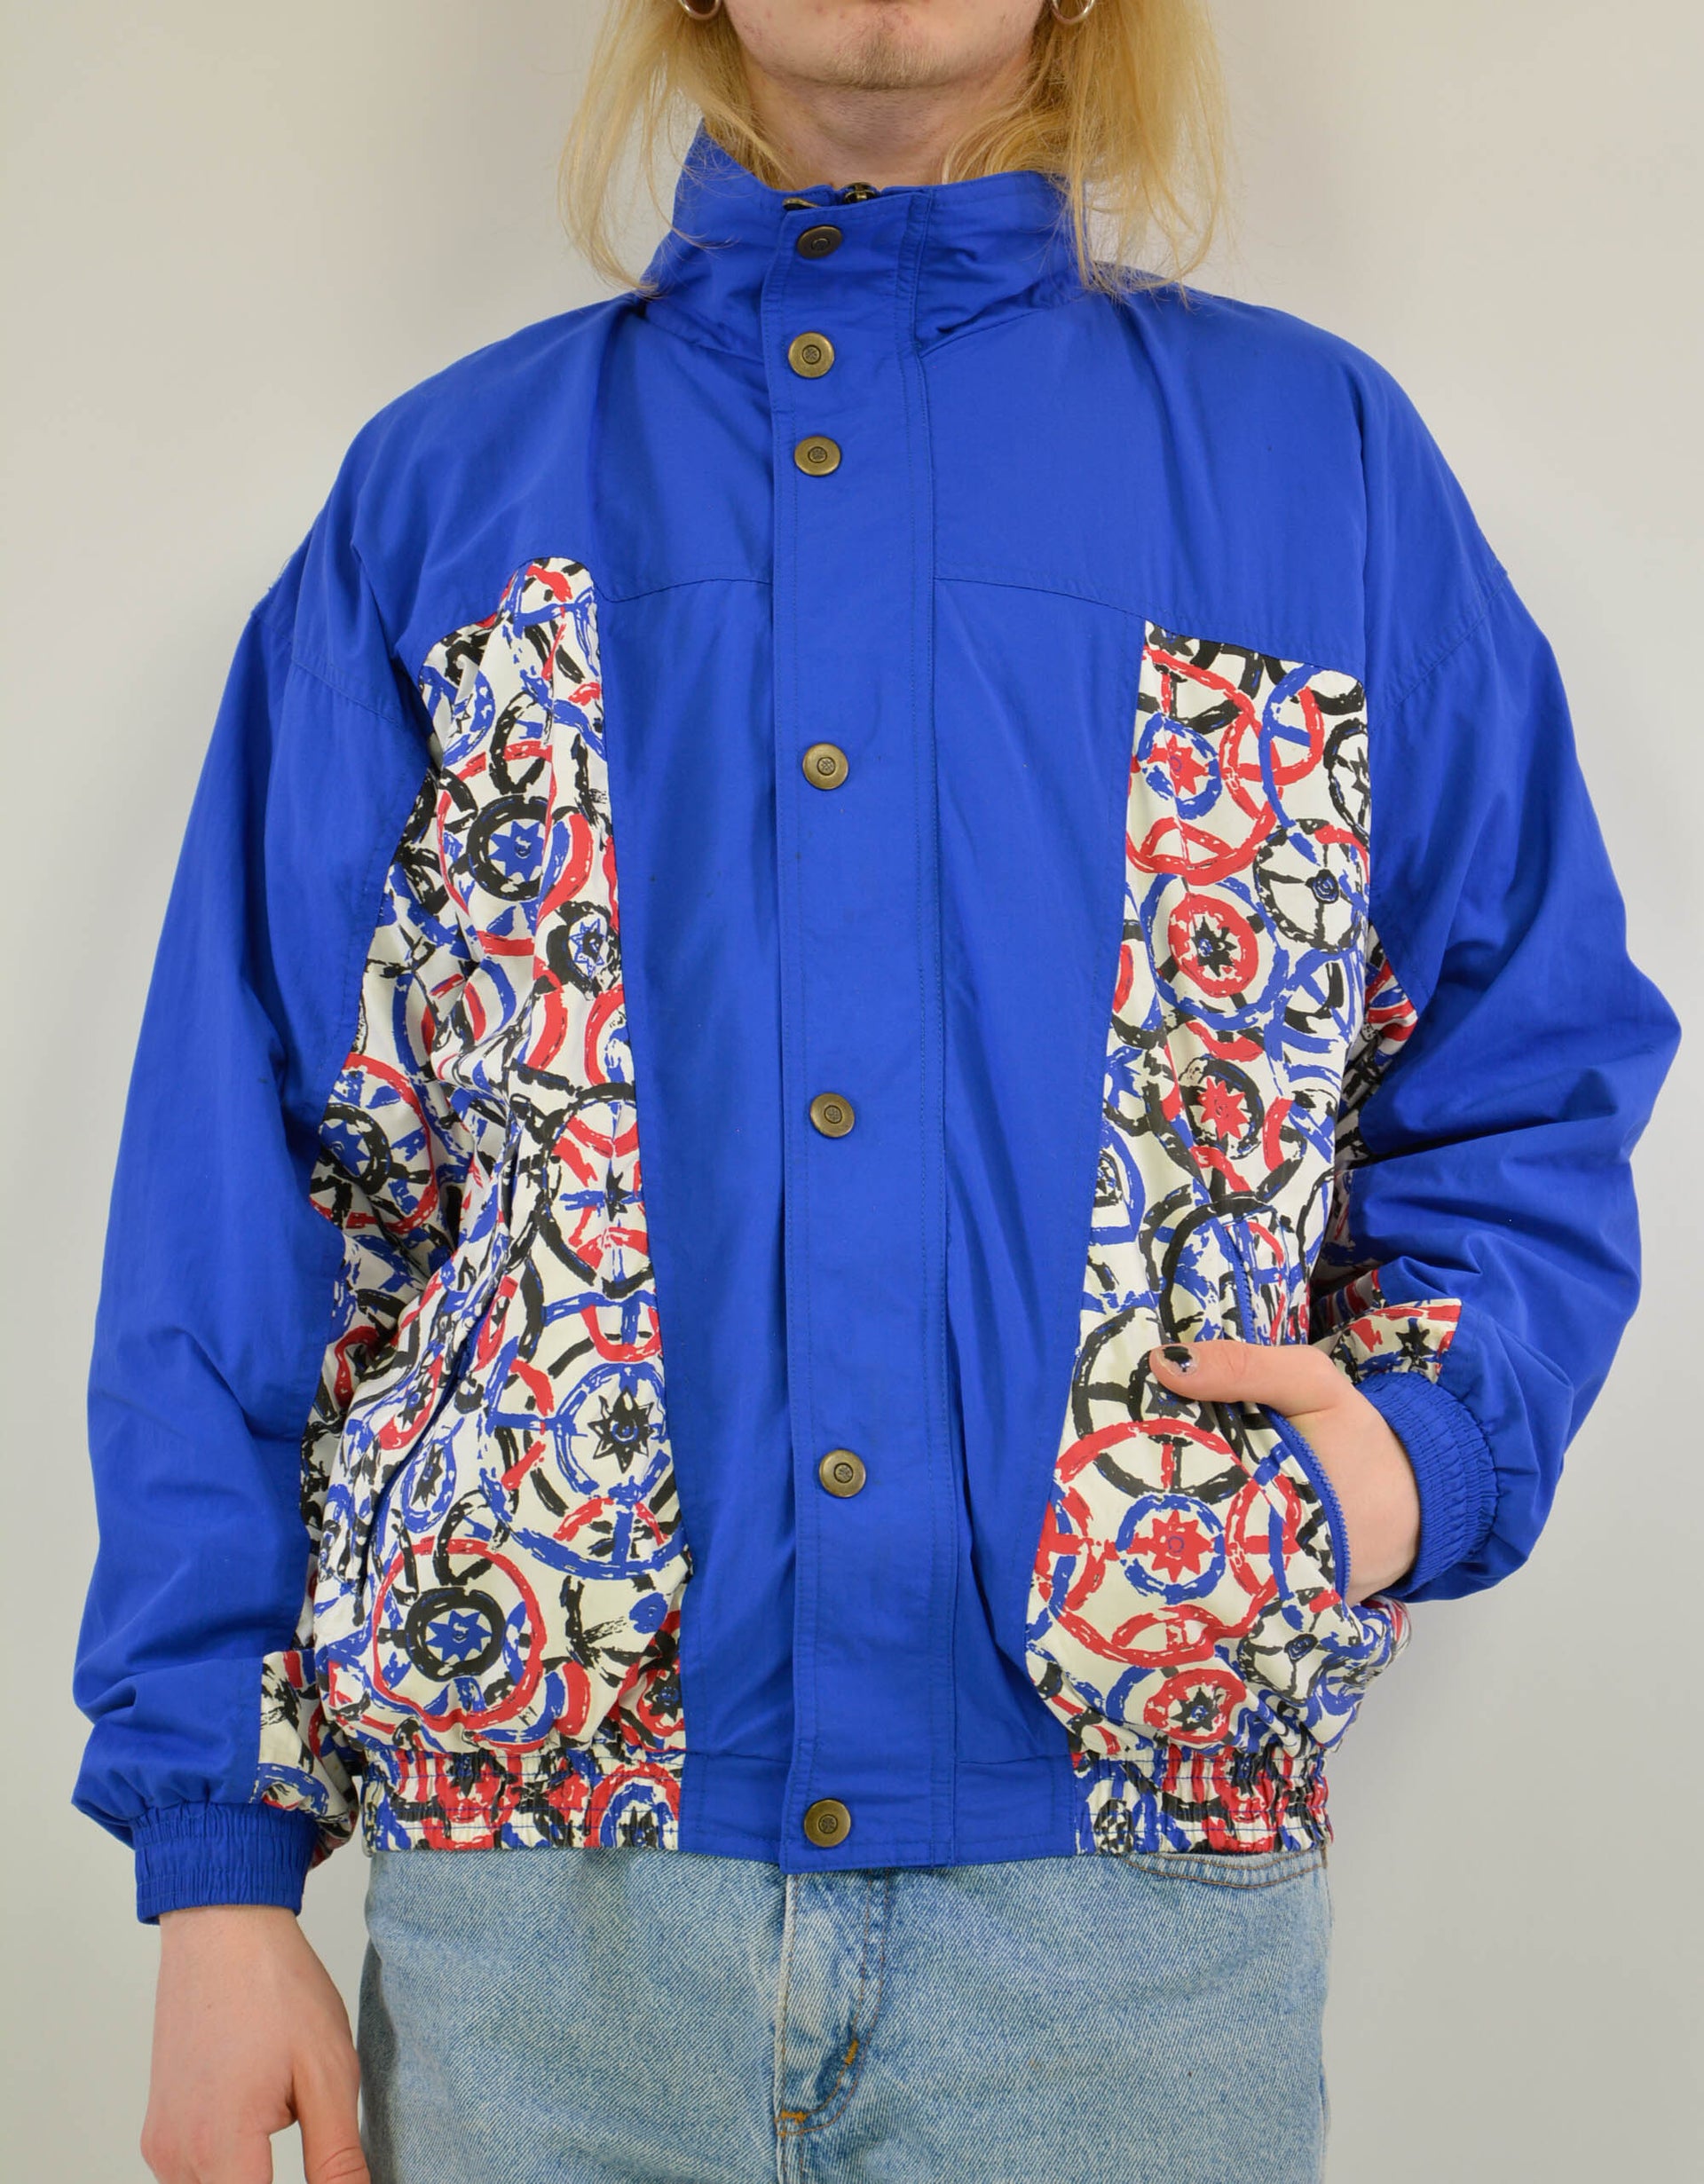 90s jacket - PICKNWEIGHT - VINTAGE KILO STORE